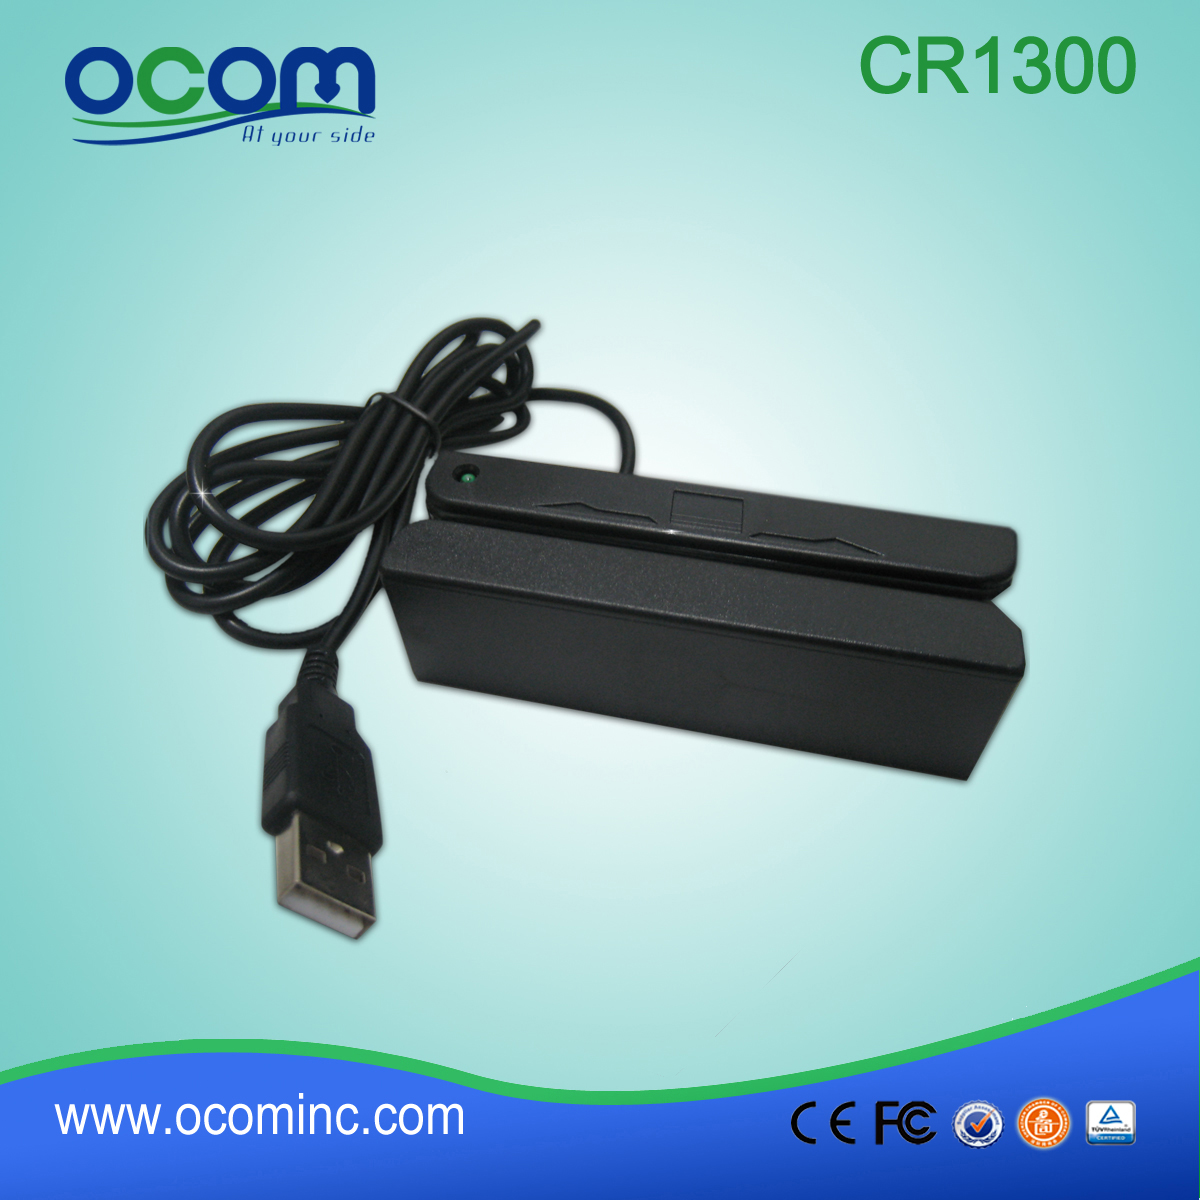 Mini portable magnetic stripe card reader CR1300